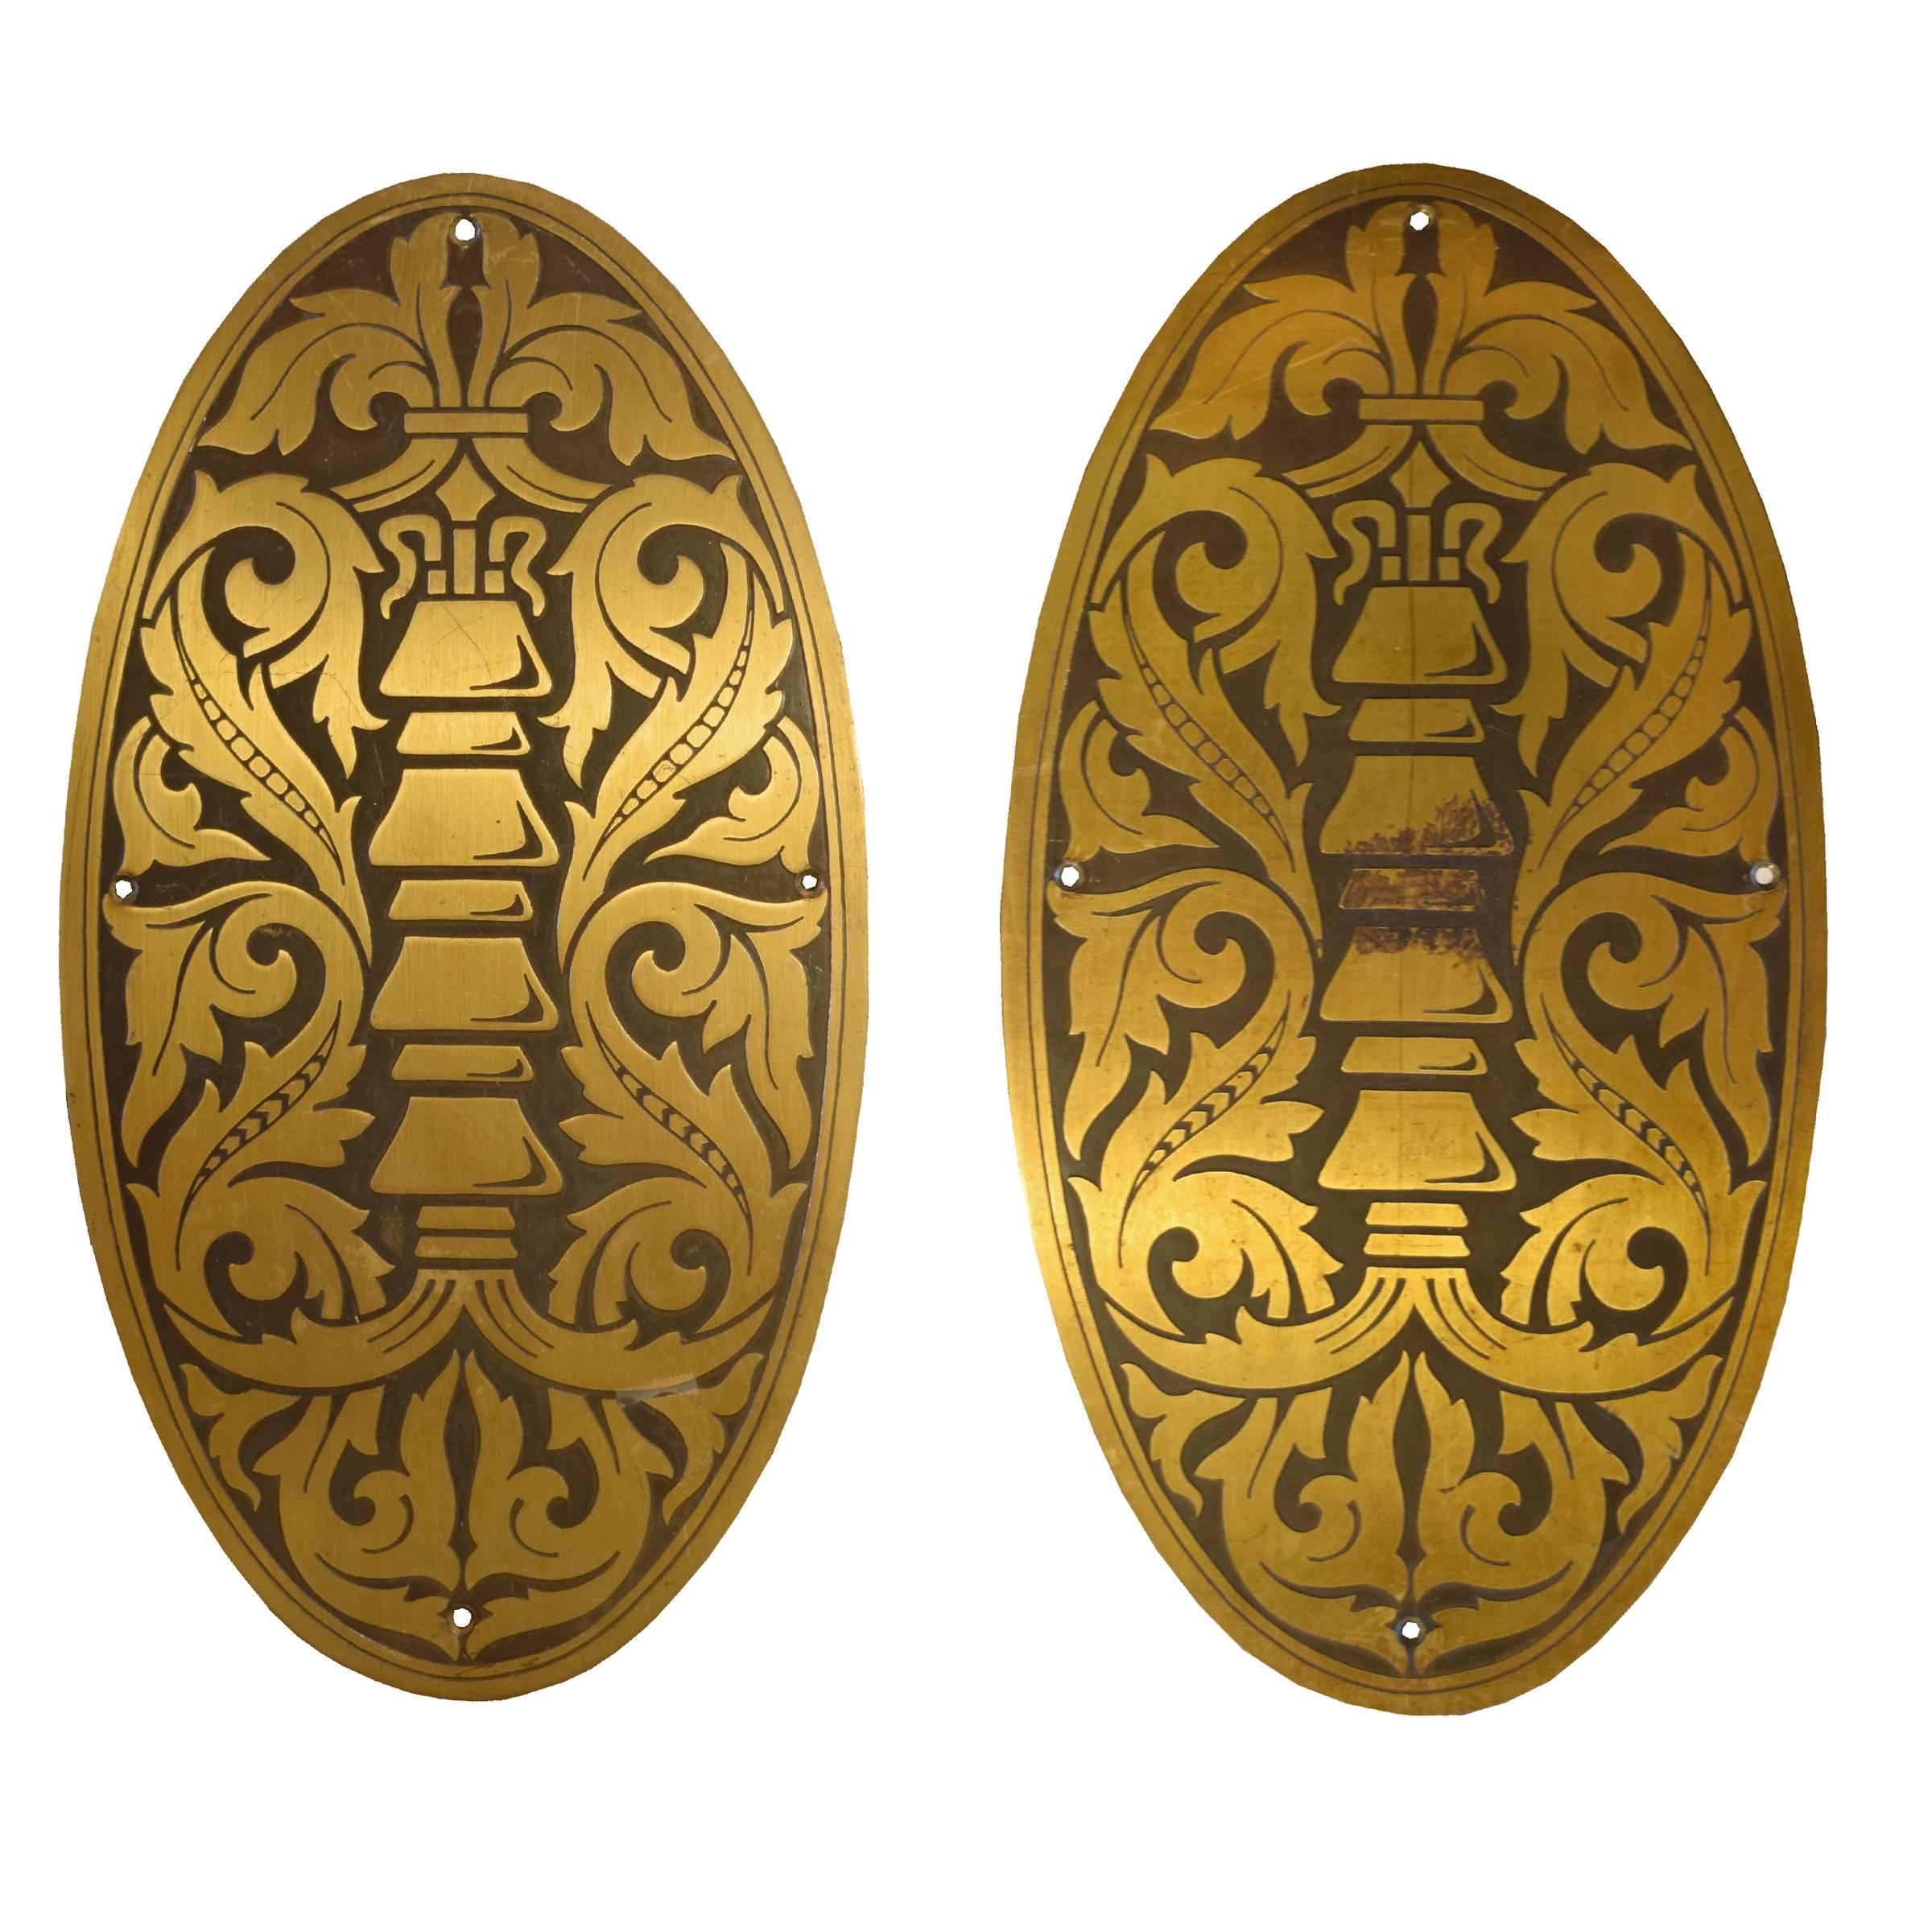 Pair of Decorative Elevator Plates